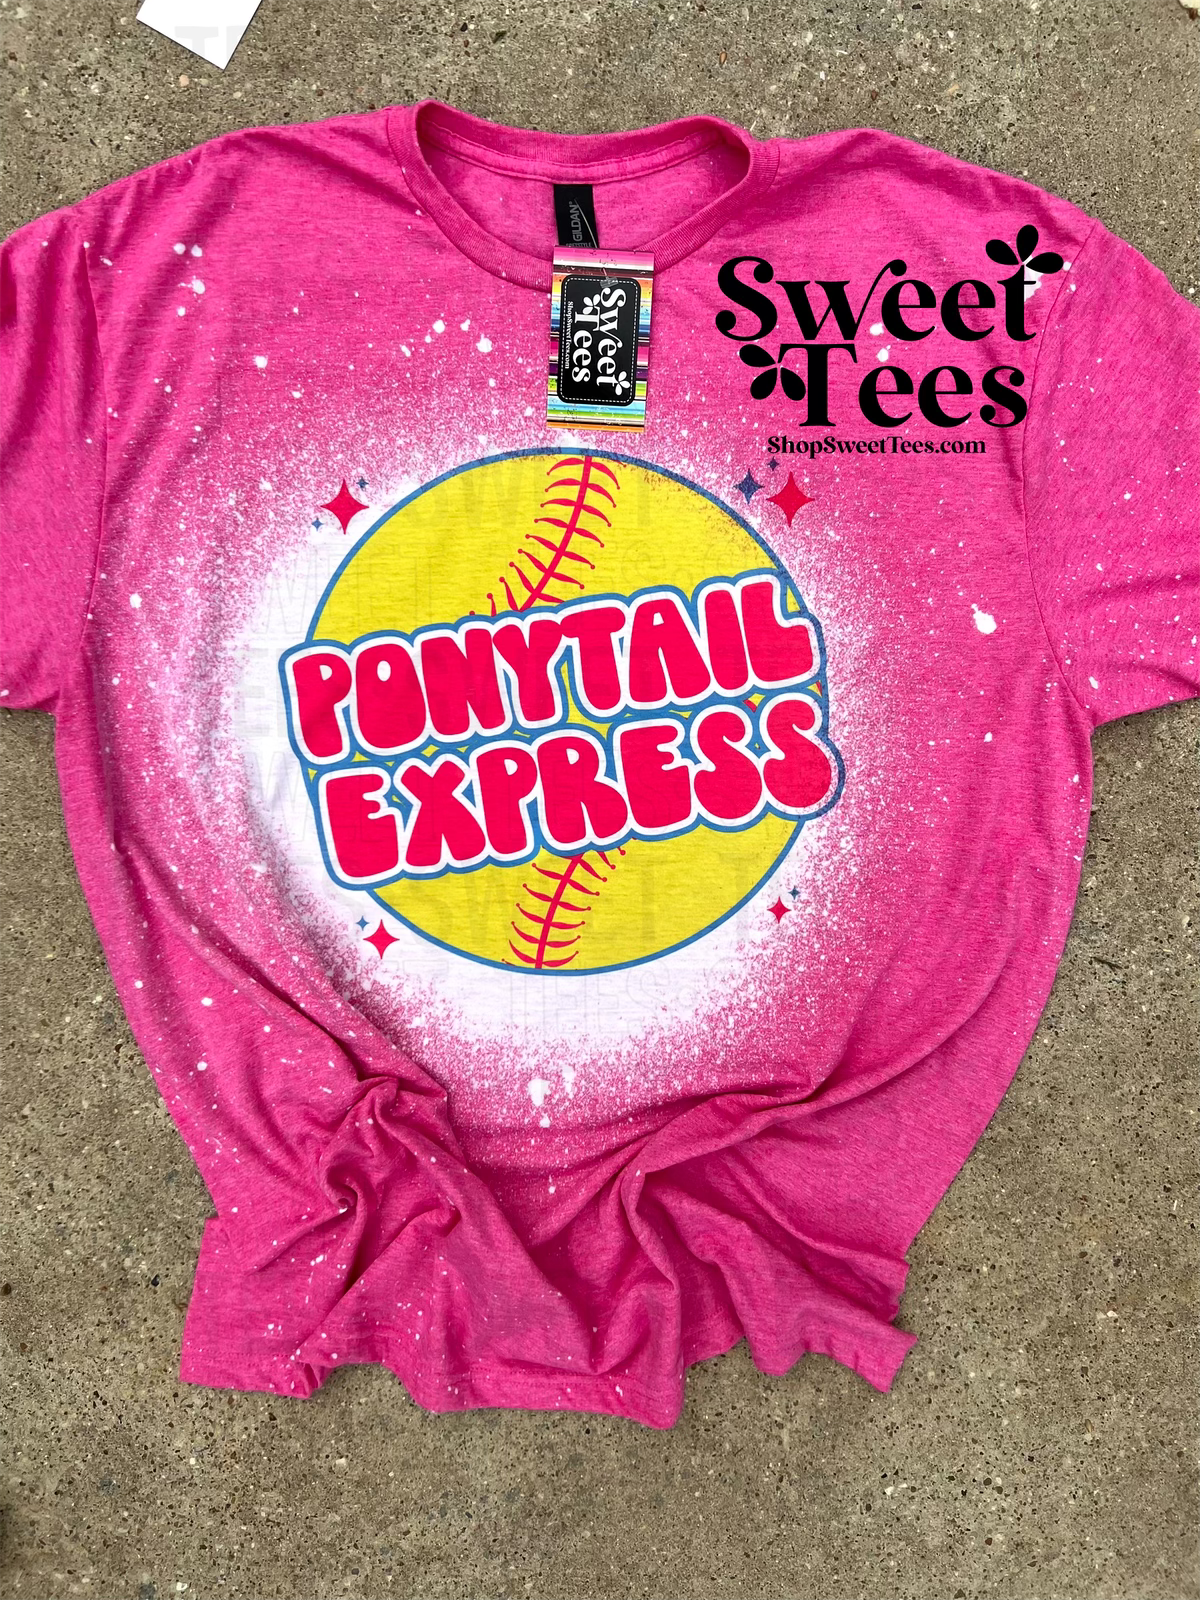 Ponytail Express Softball tee